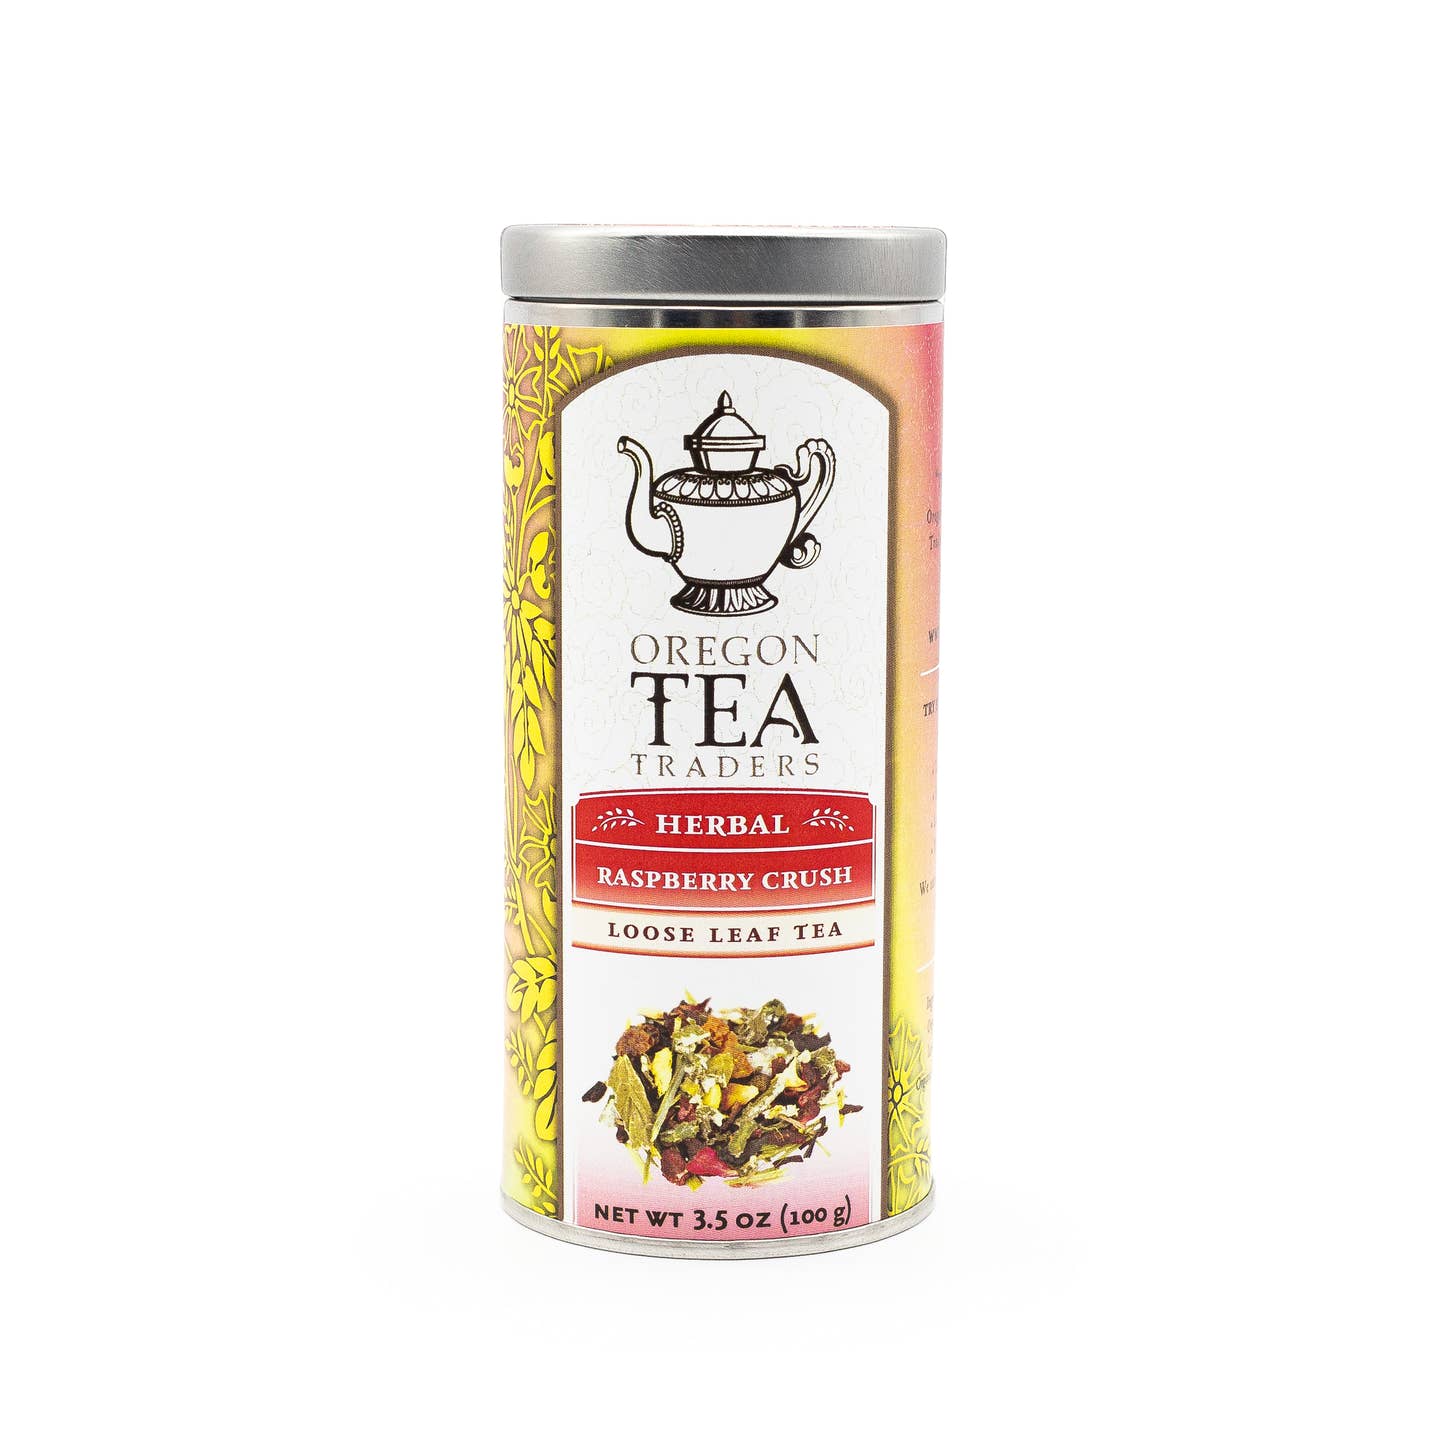 Raspberry Crush Hibiscus Tea by Oregon Tea Traders loose leaf herbal tea tin